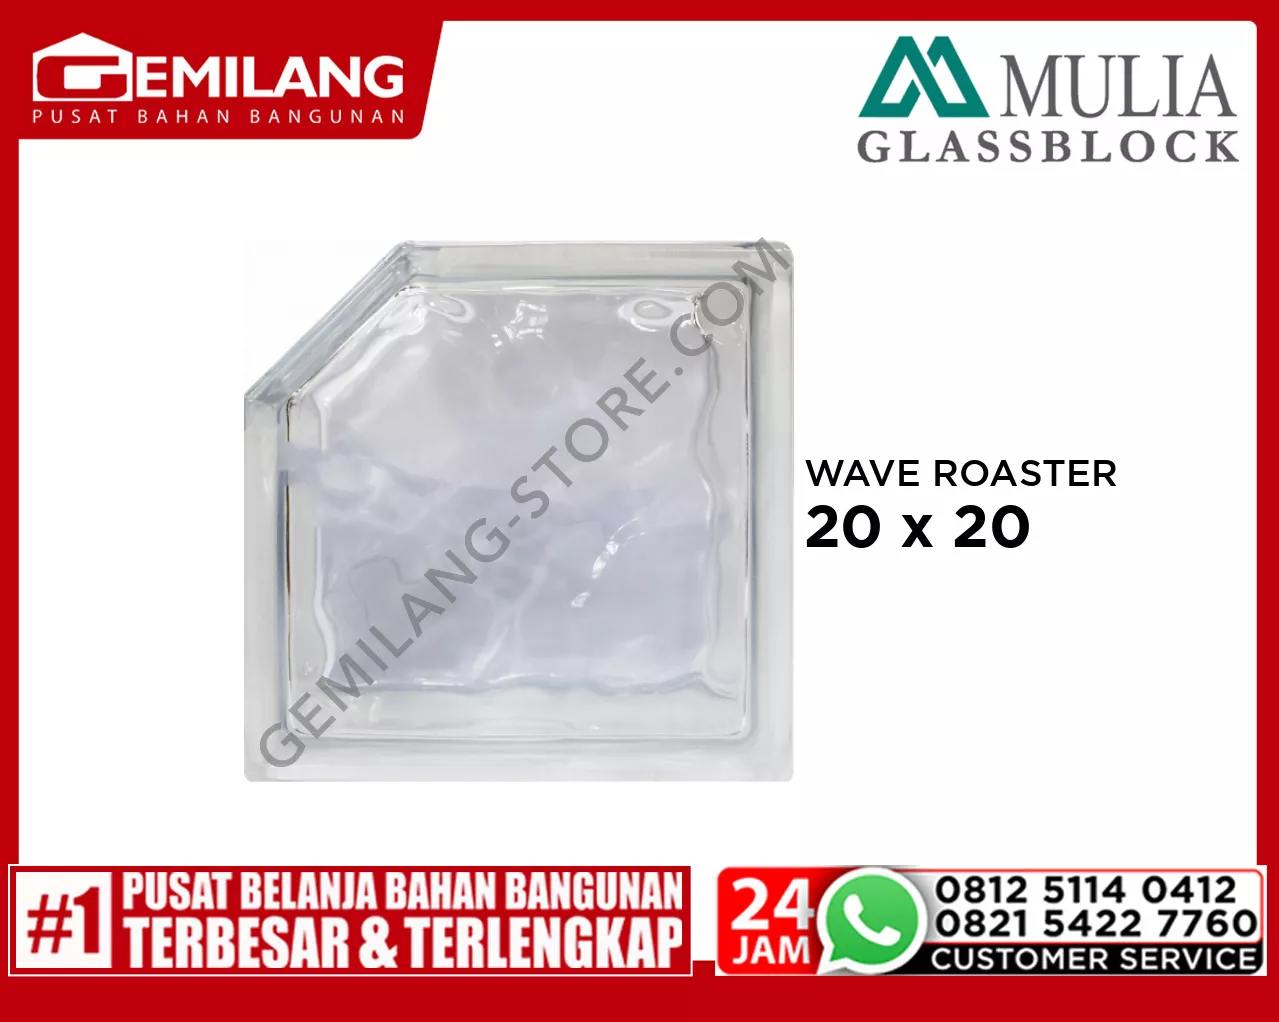 MULIA GLASS BLOCK WAVE ROASTER 20 x 20